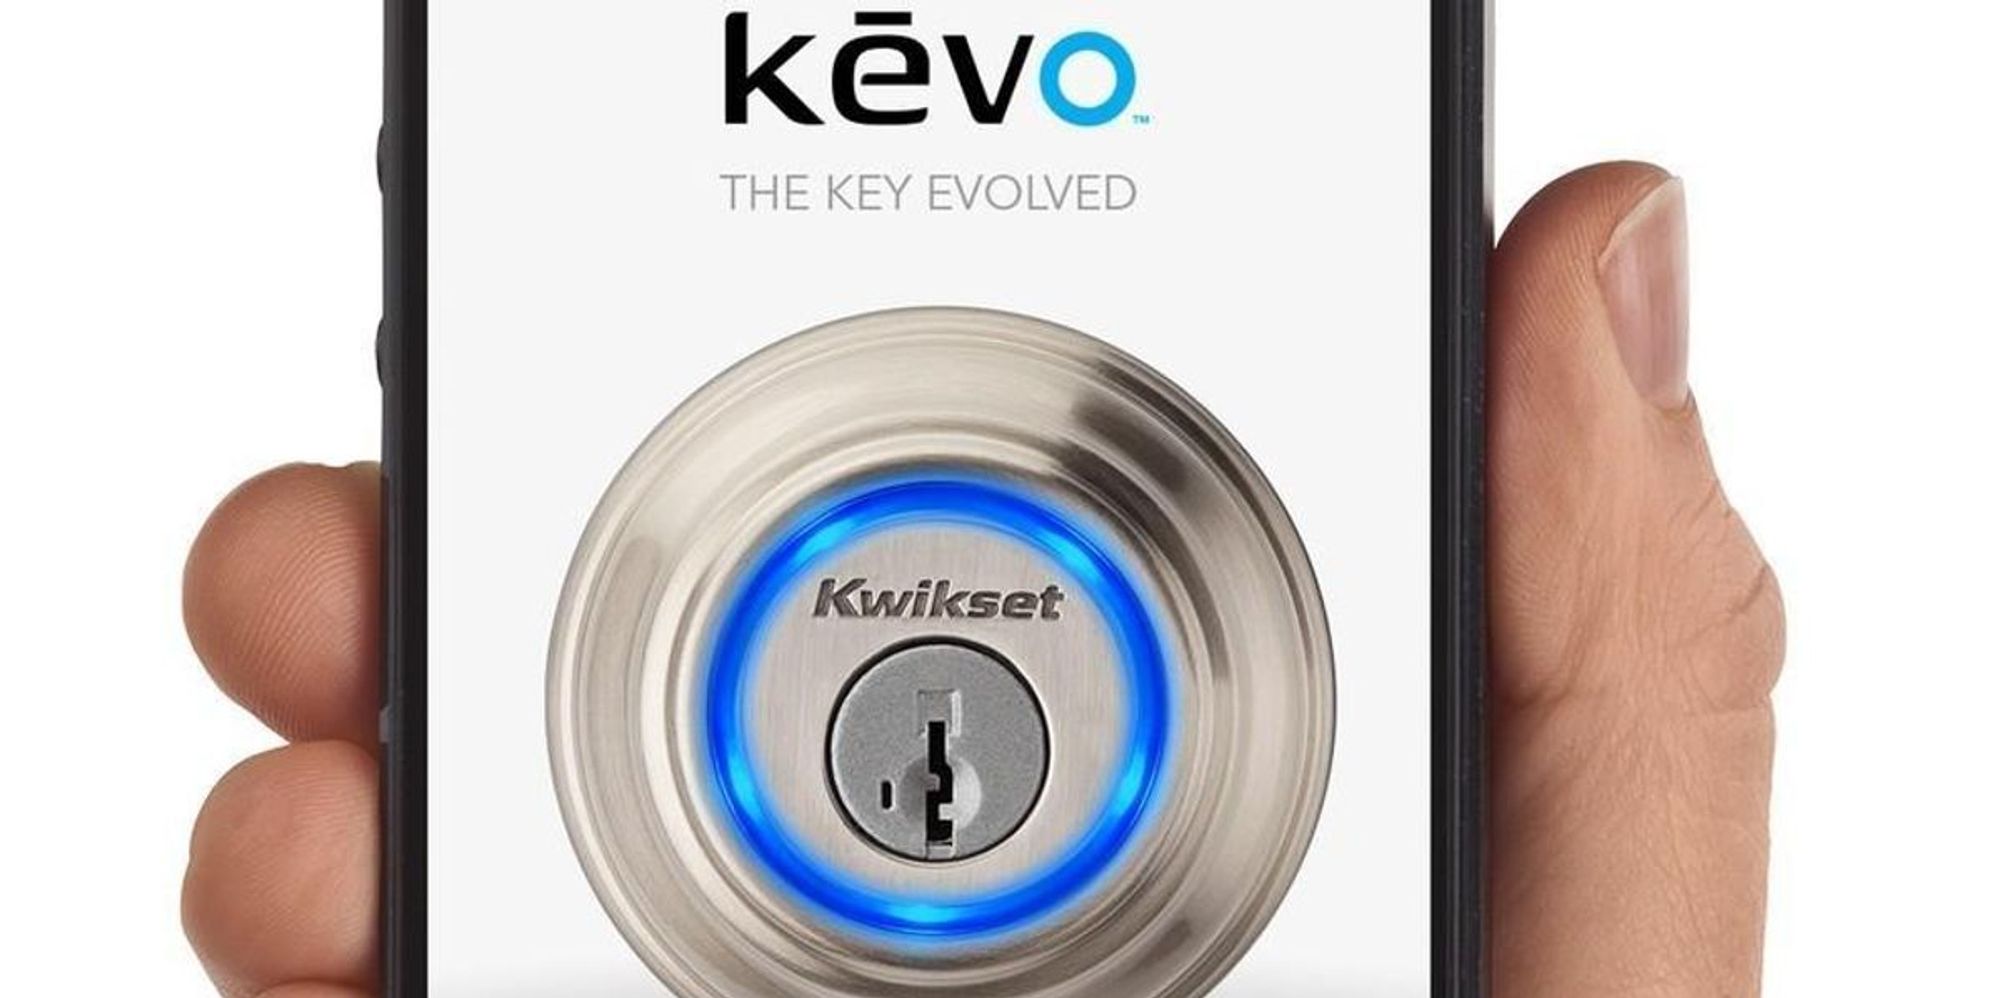 Kwikset Announces Amazon Alexa Skill for Kevo Smart Locks ...